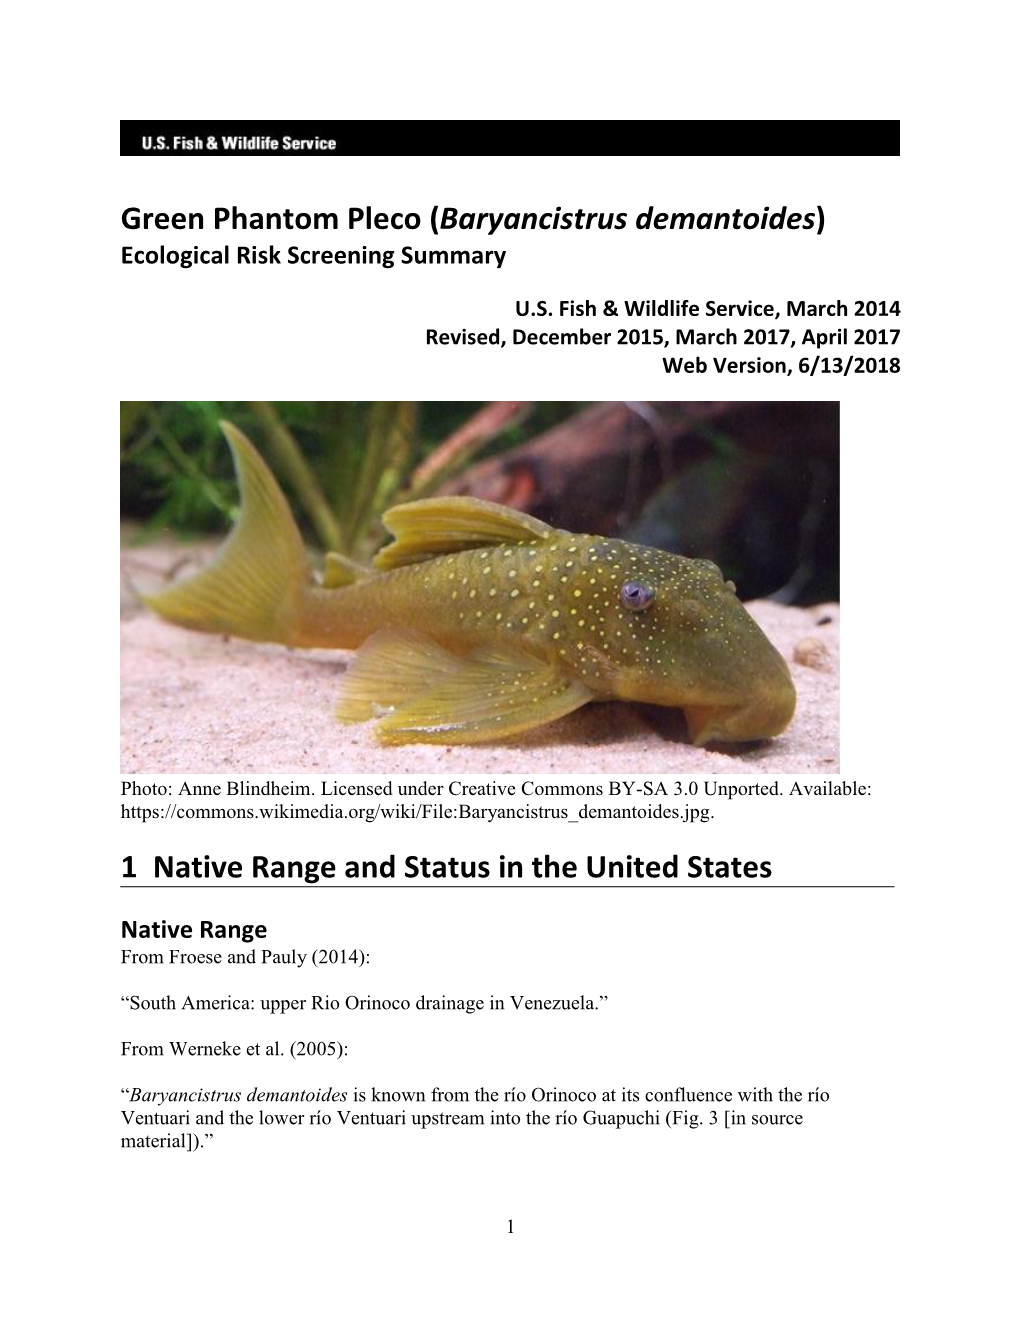 Green Phantom Pleco (Baryancistrus Demantoides) Ecological Risk Screening Summary